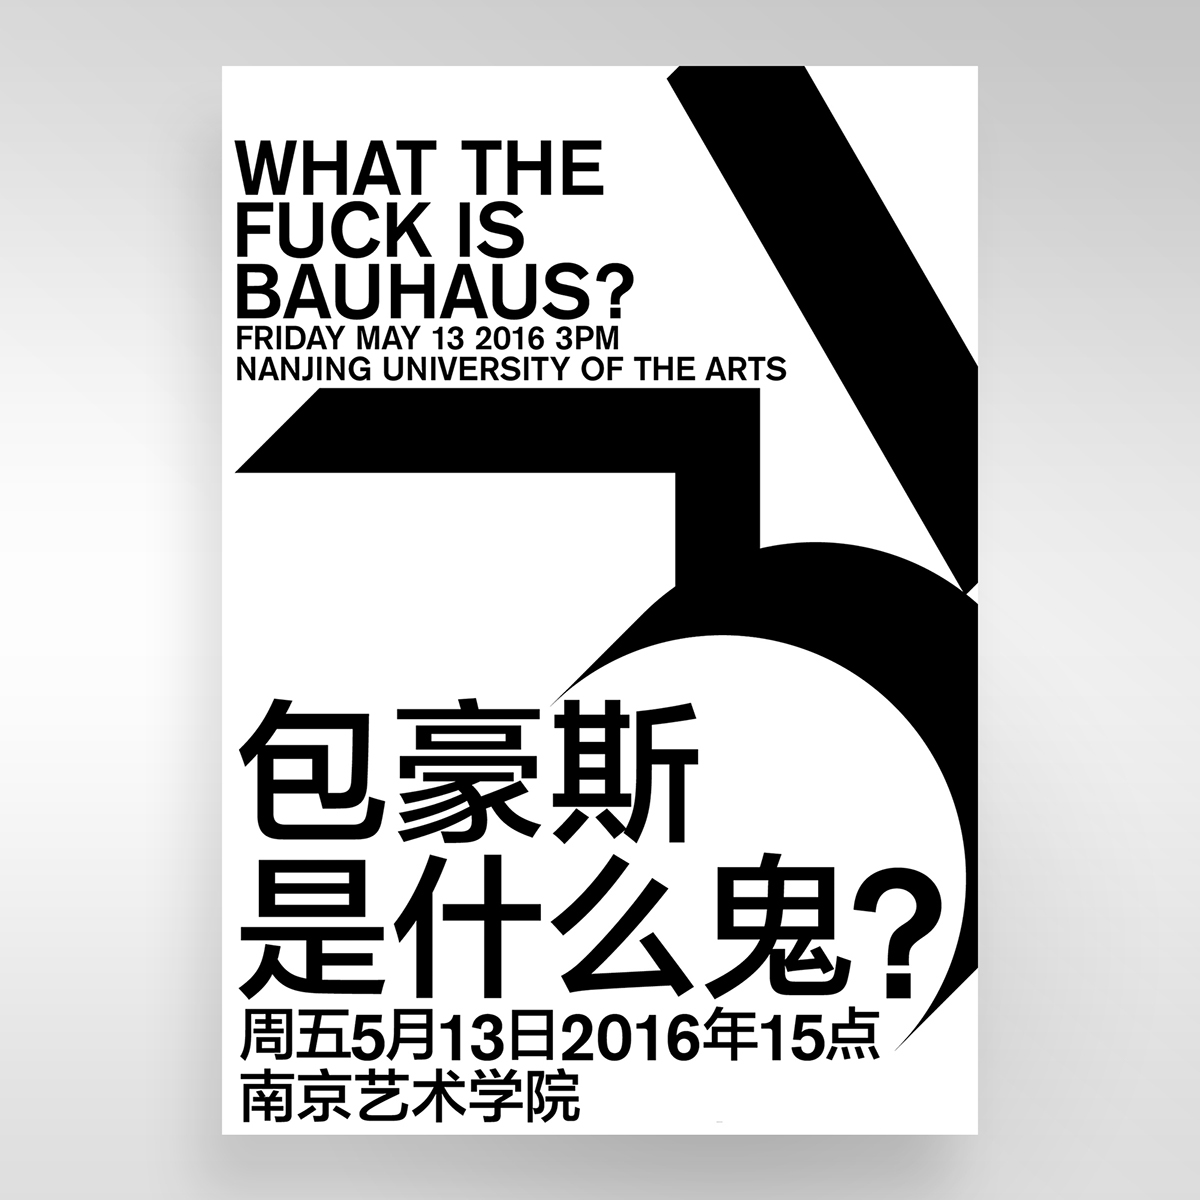 poster posterdesign china chinese bauhaus black White blackandwhite type typo circle triangle square simple Form